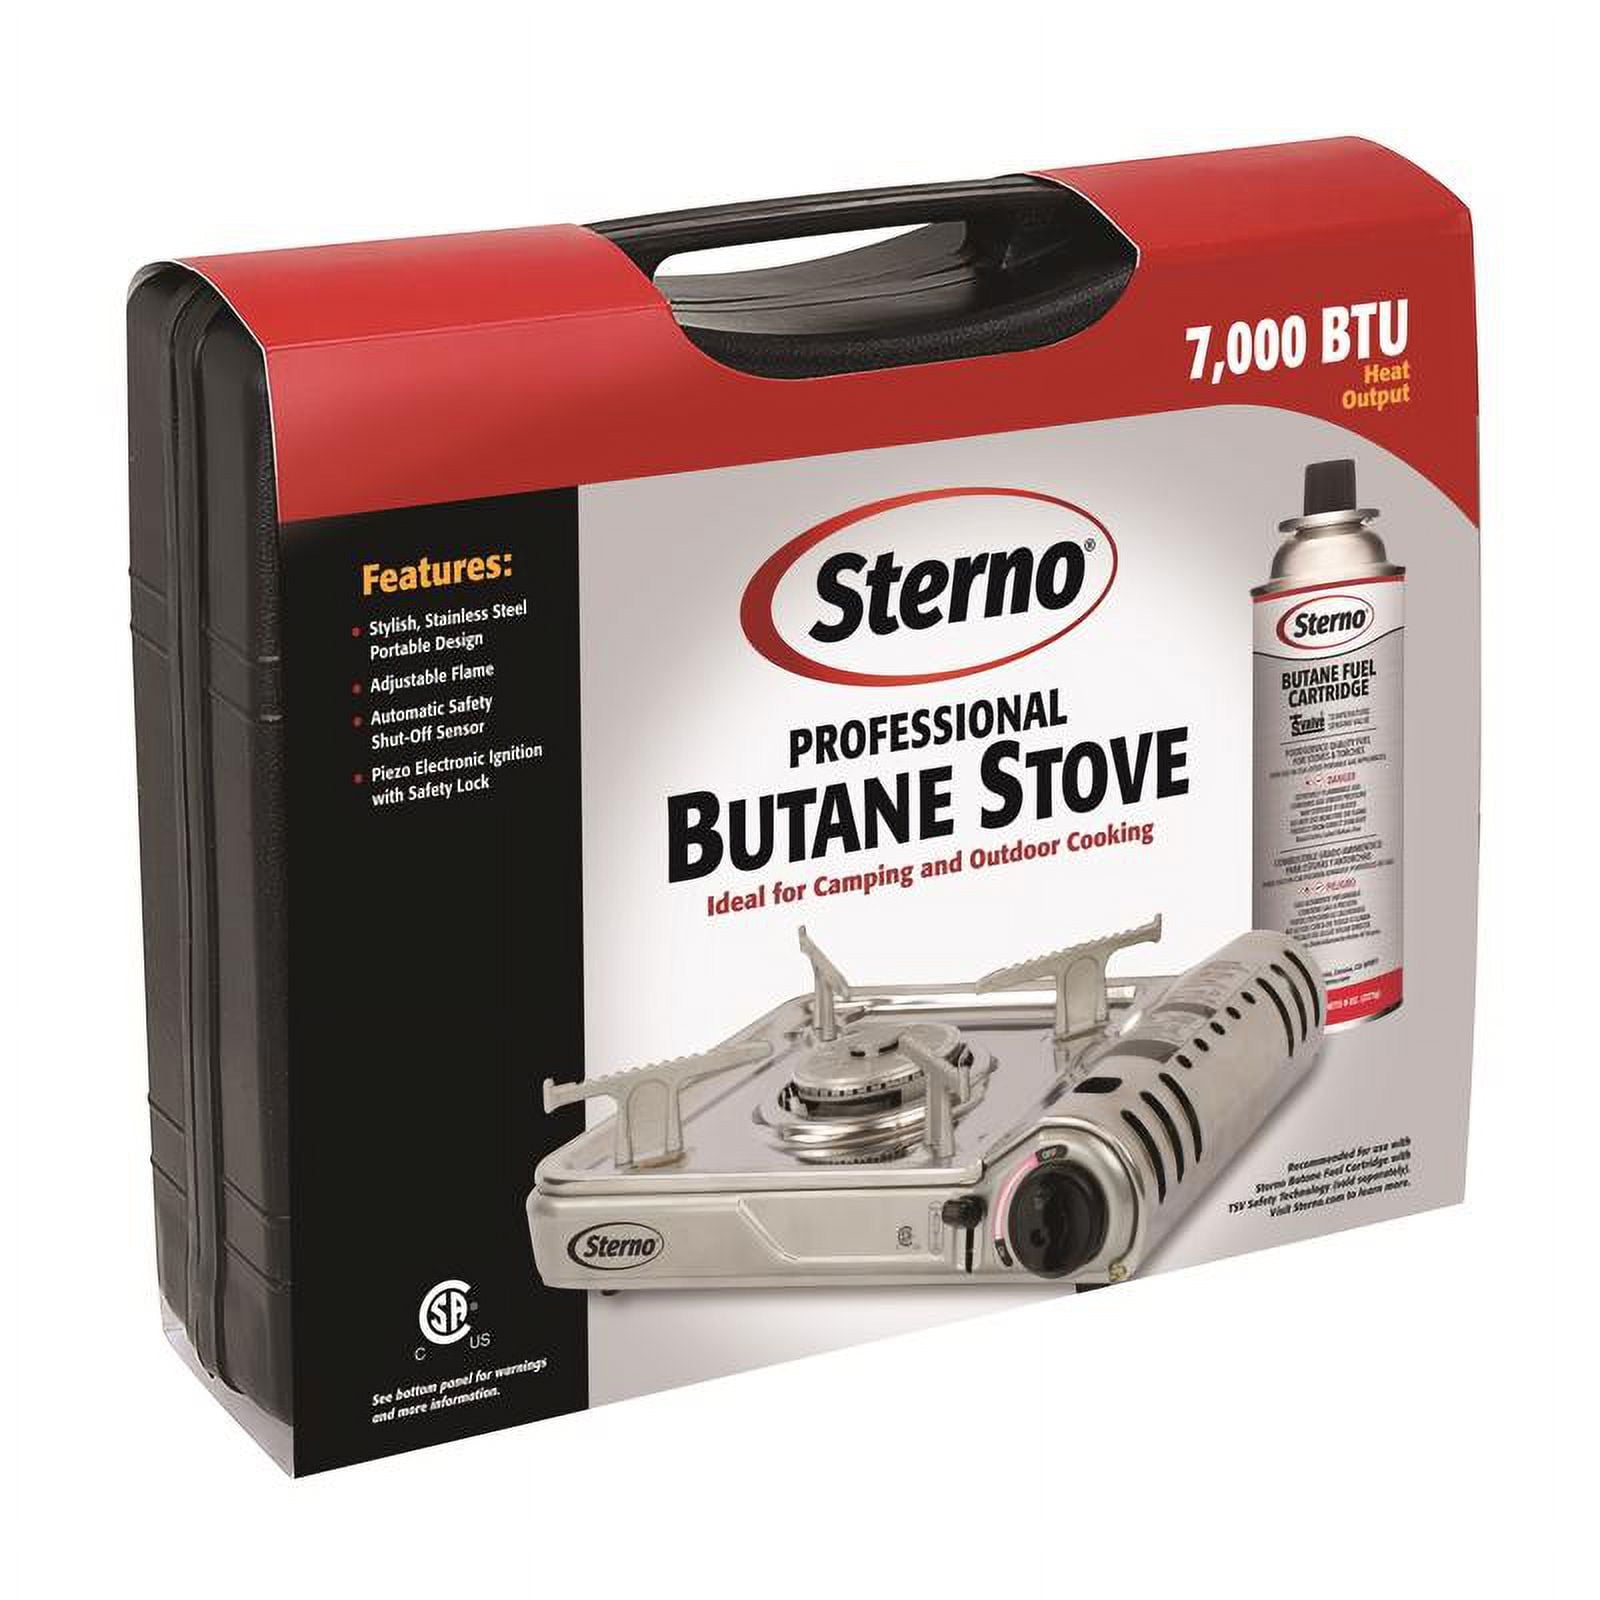 Sterno Portable Butane Stove, Single Burner, Stainless Steel, Includes Travel Case, 7,000 BTU